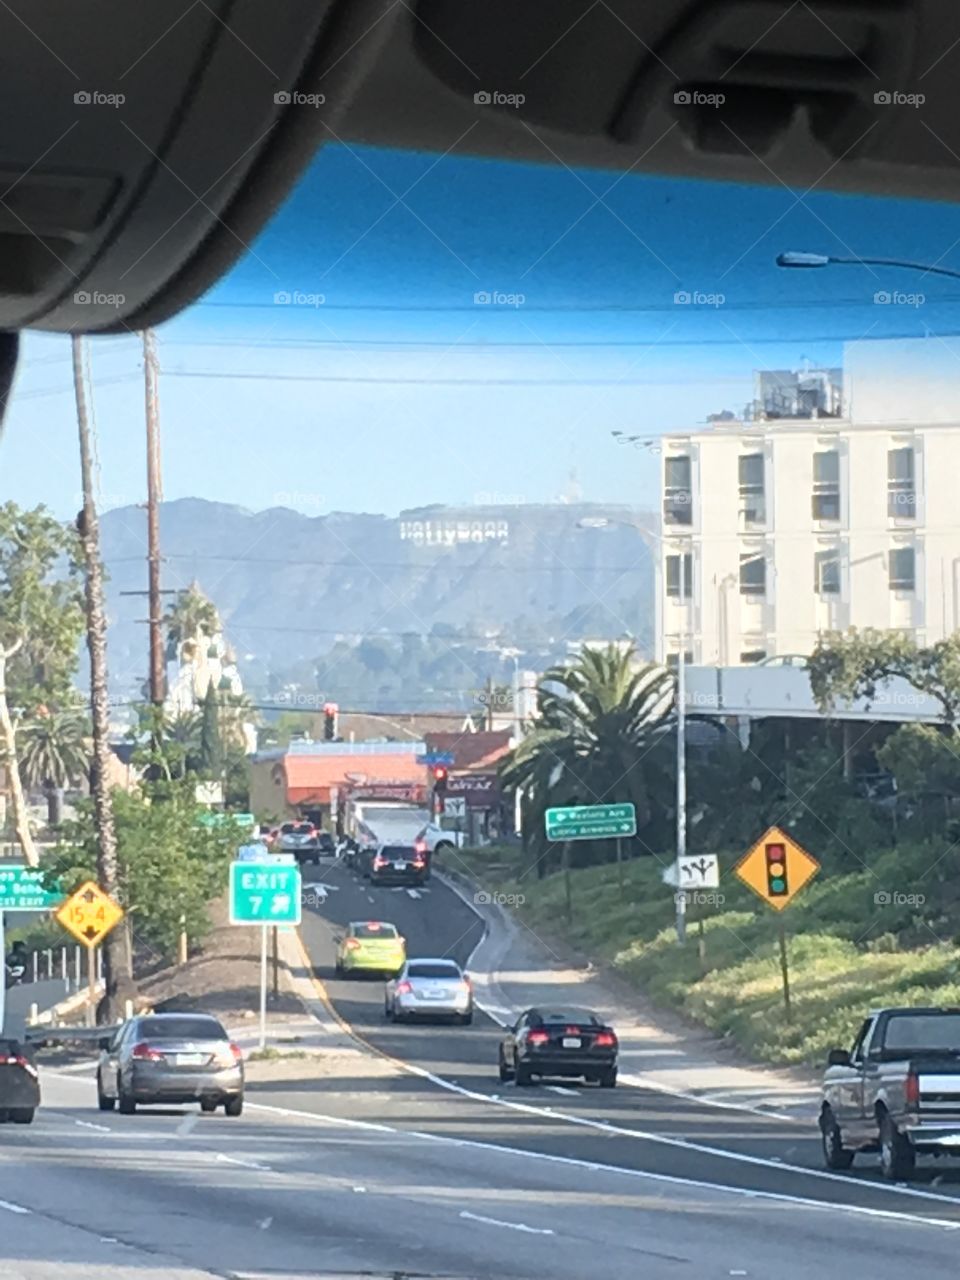 Hollywood scenery